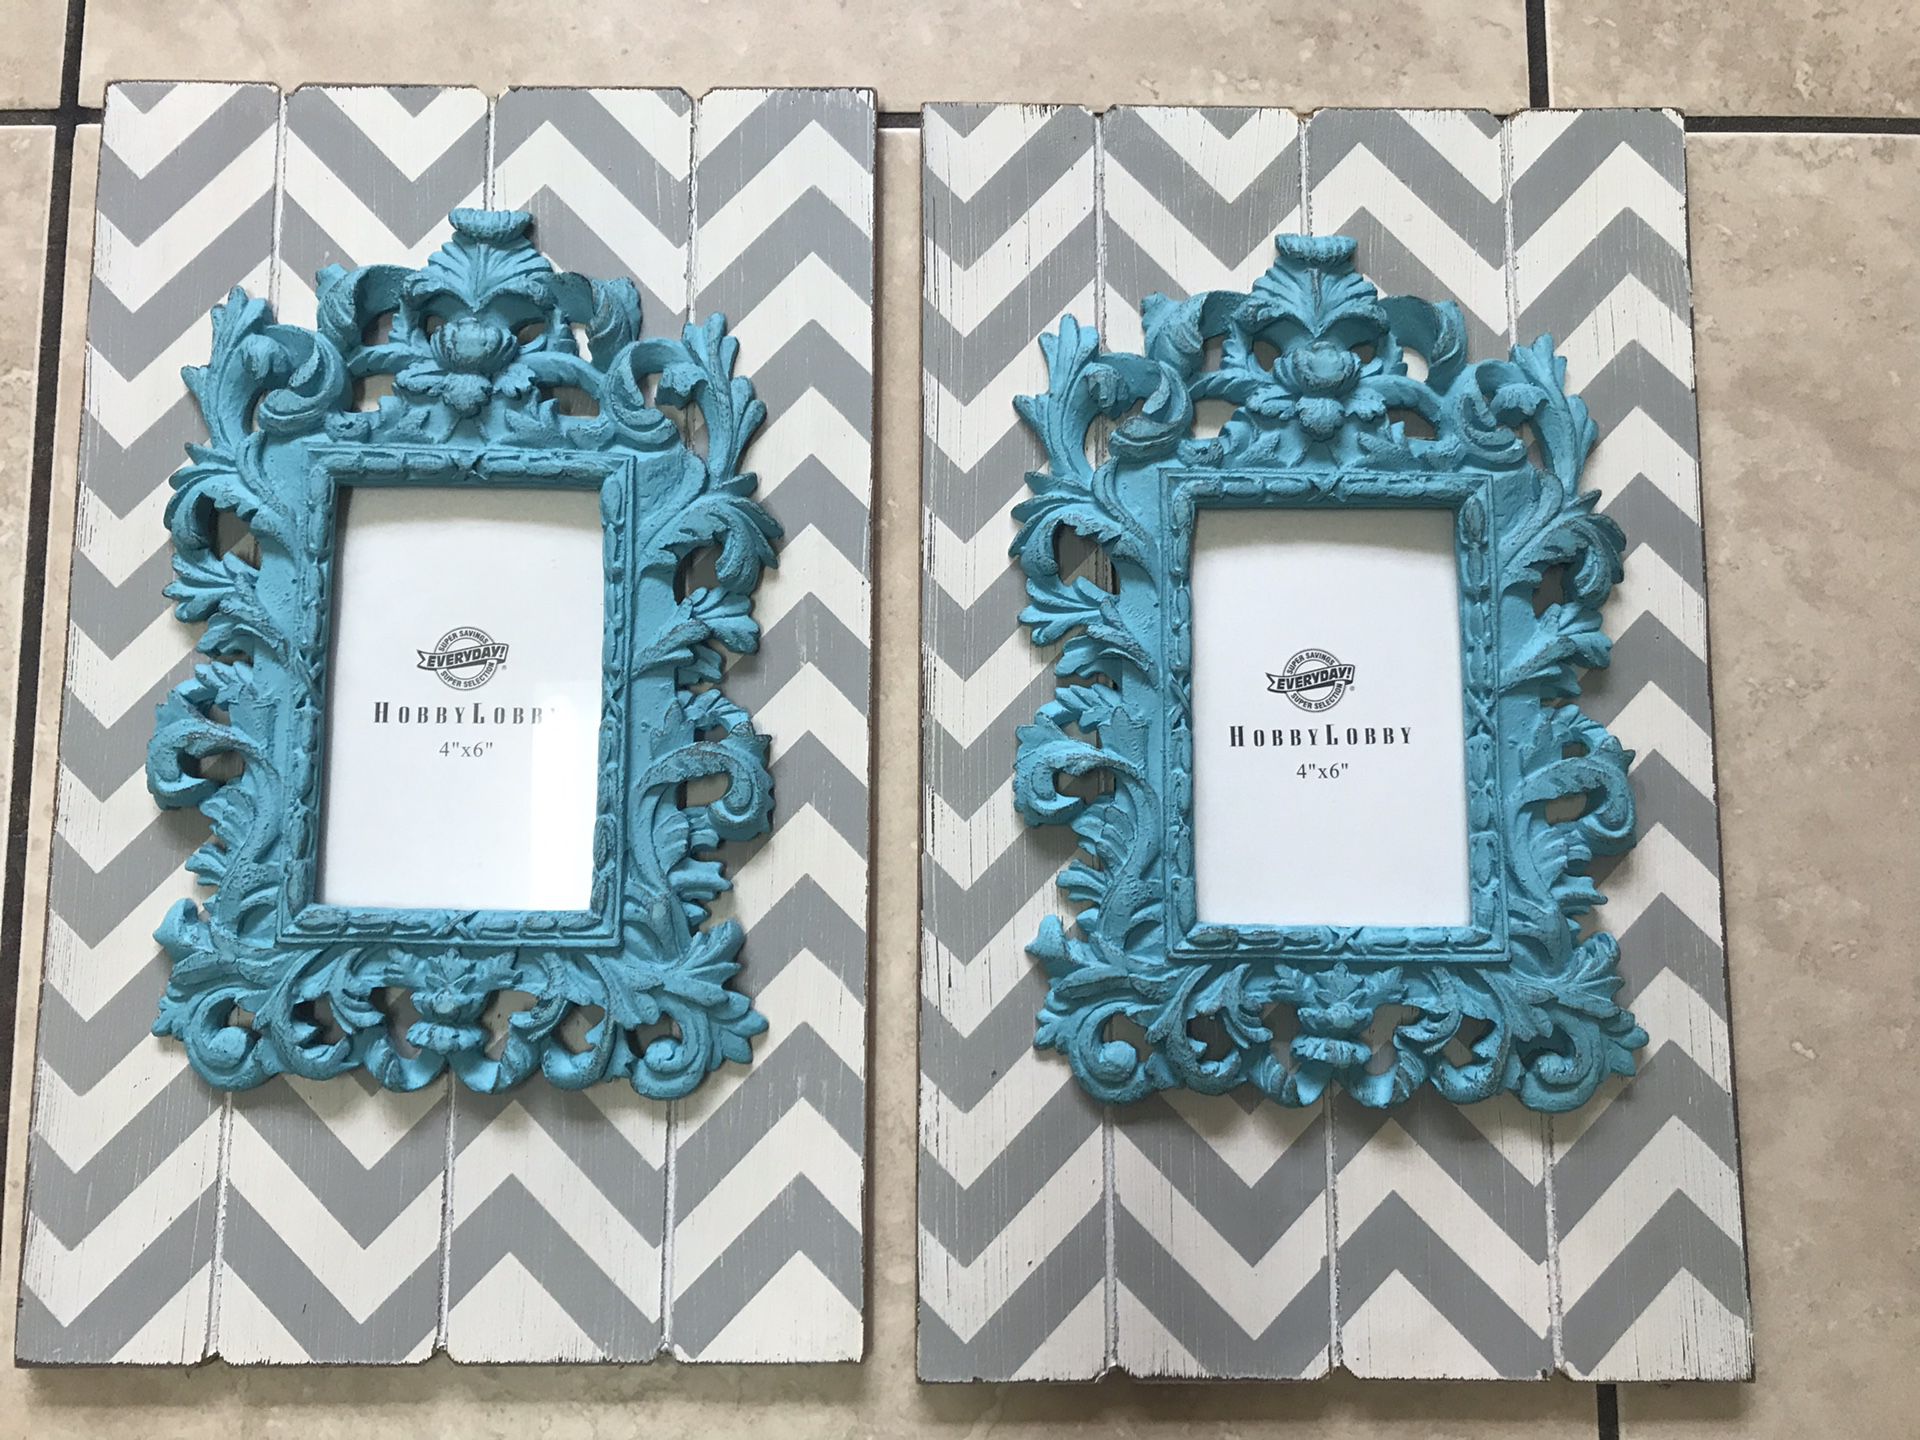 2 portrait frames from Hobby Lobby